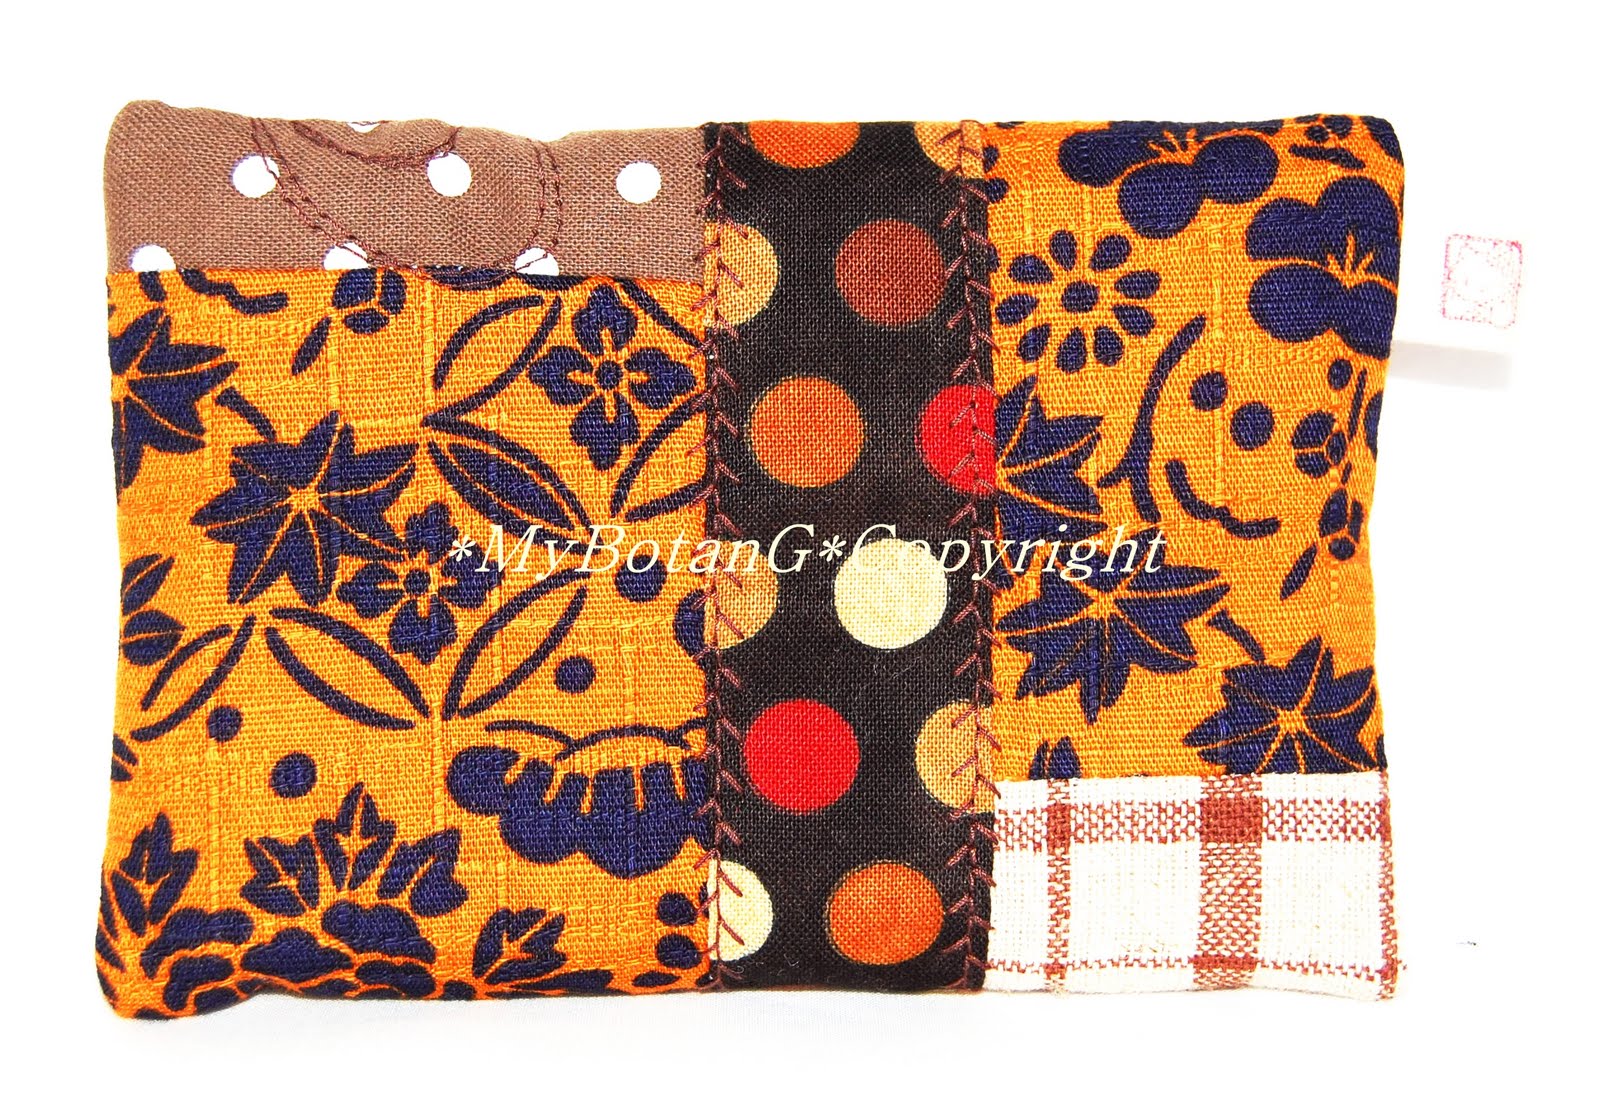 36 Top Pictures Decorative Pocket Tissues : Amazon.com: decorative pocket tissues